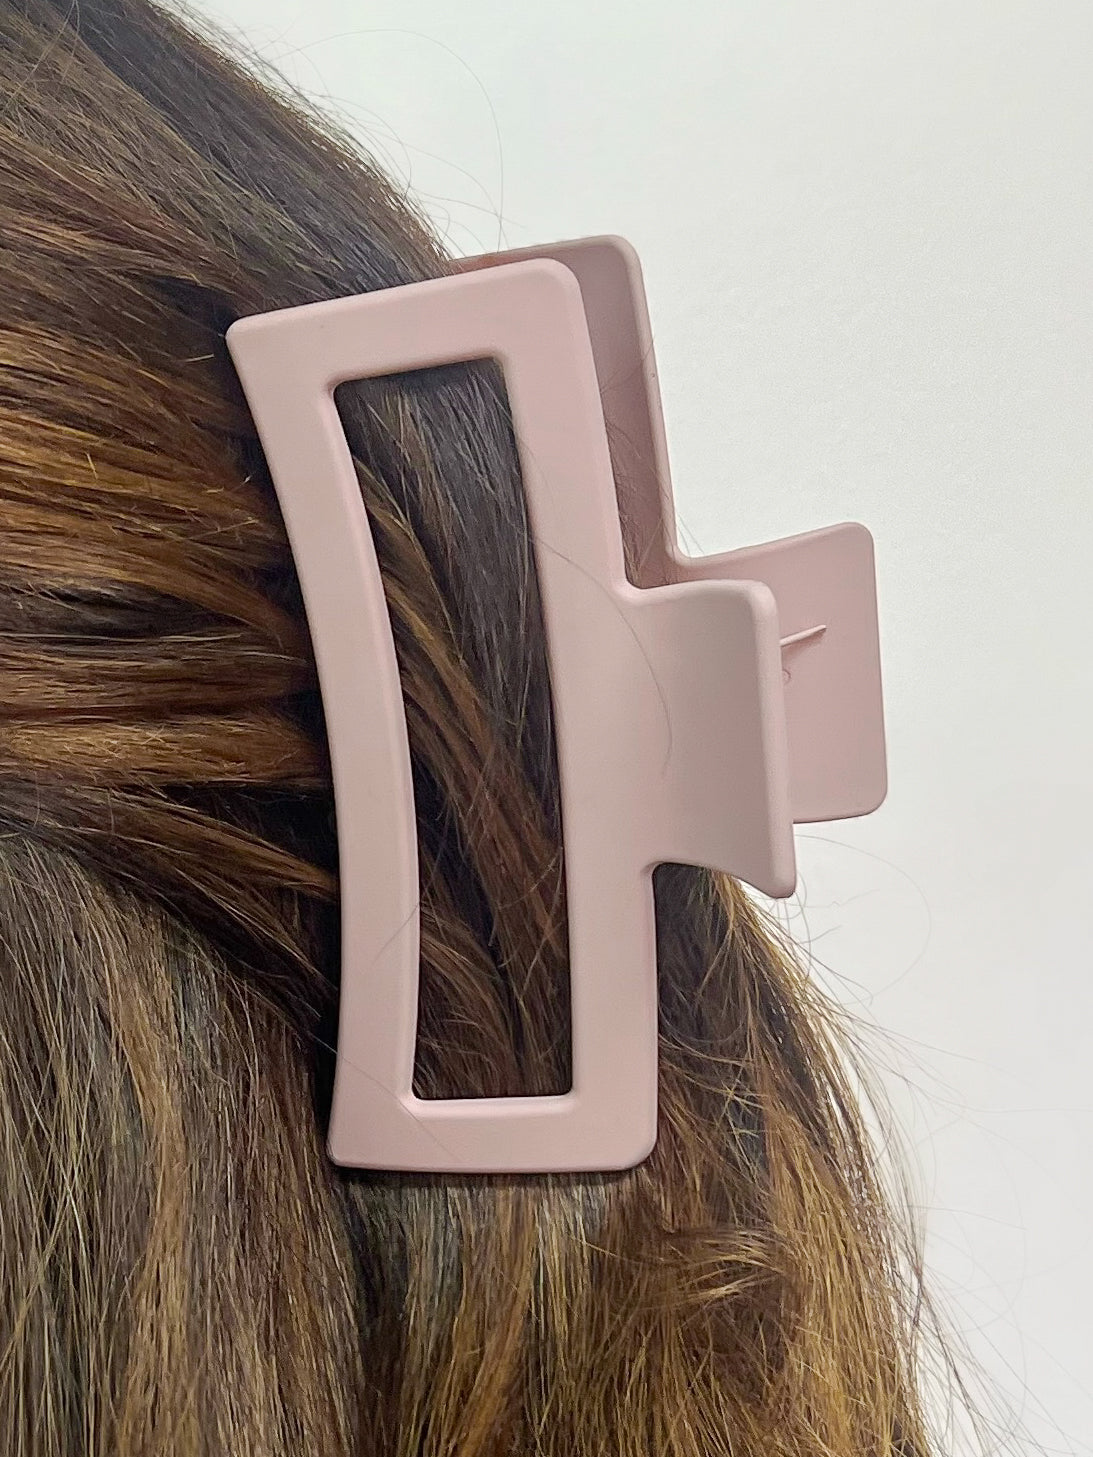 Louis Vuitton Monogram Hair Accessories